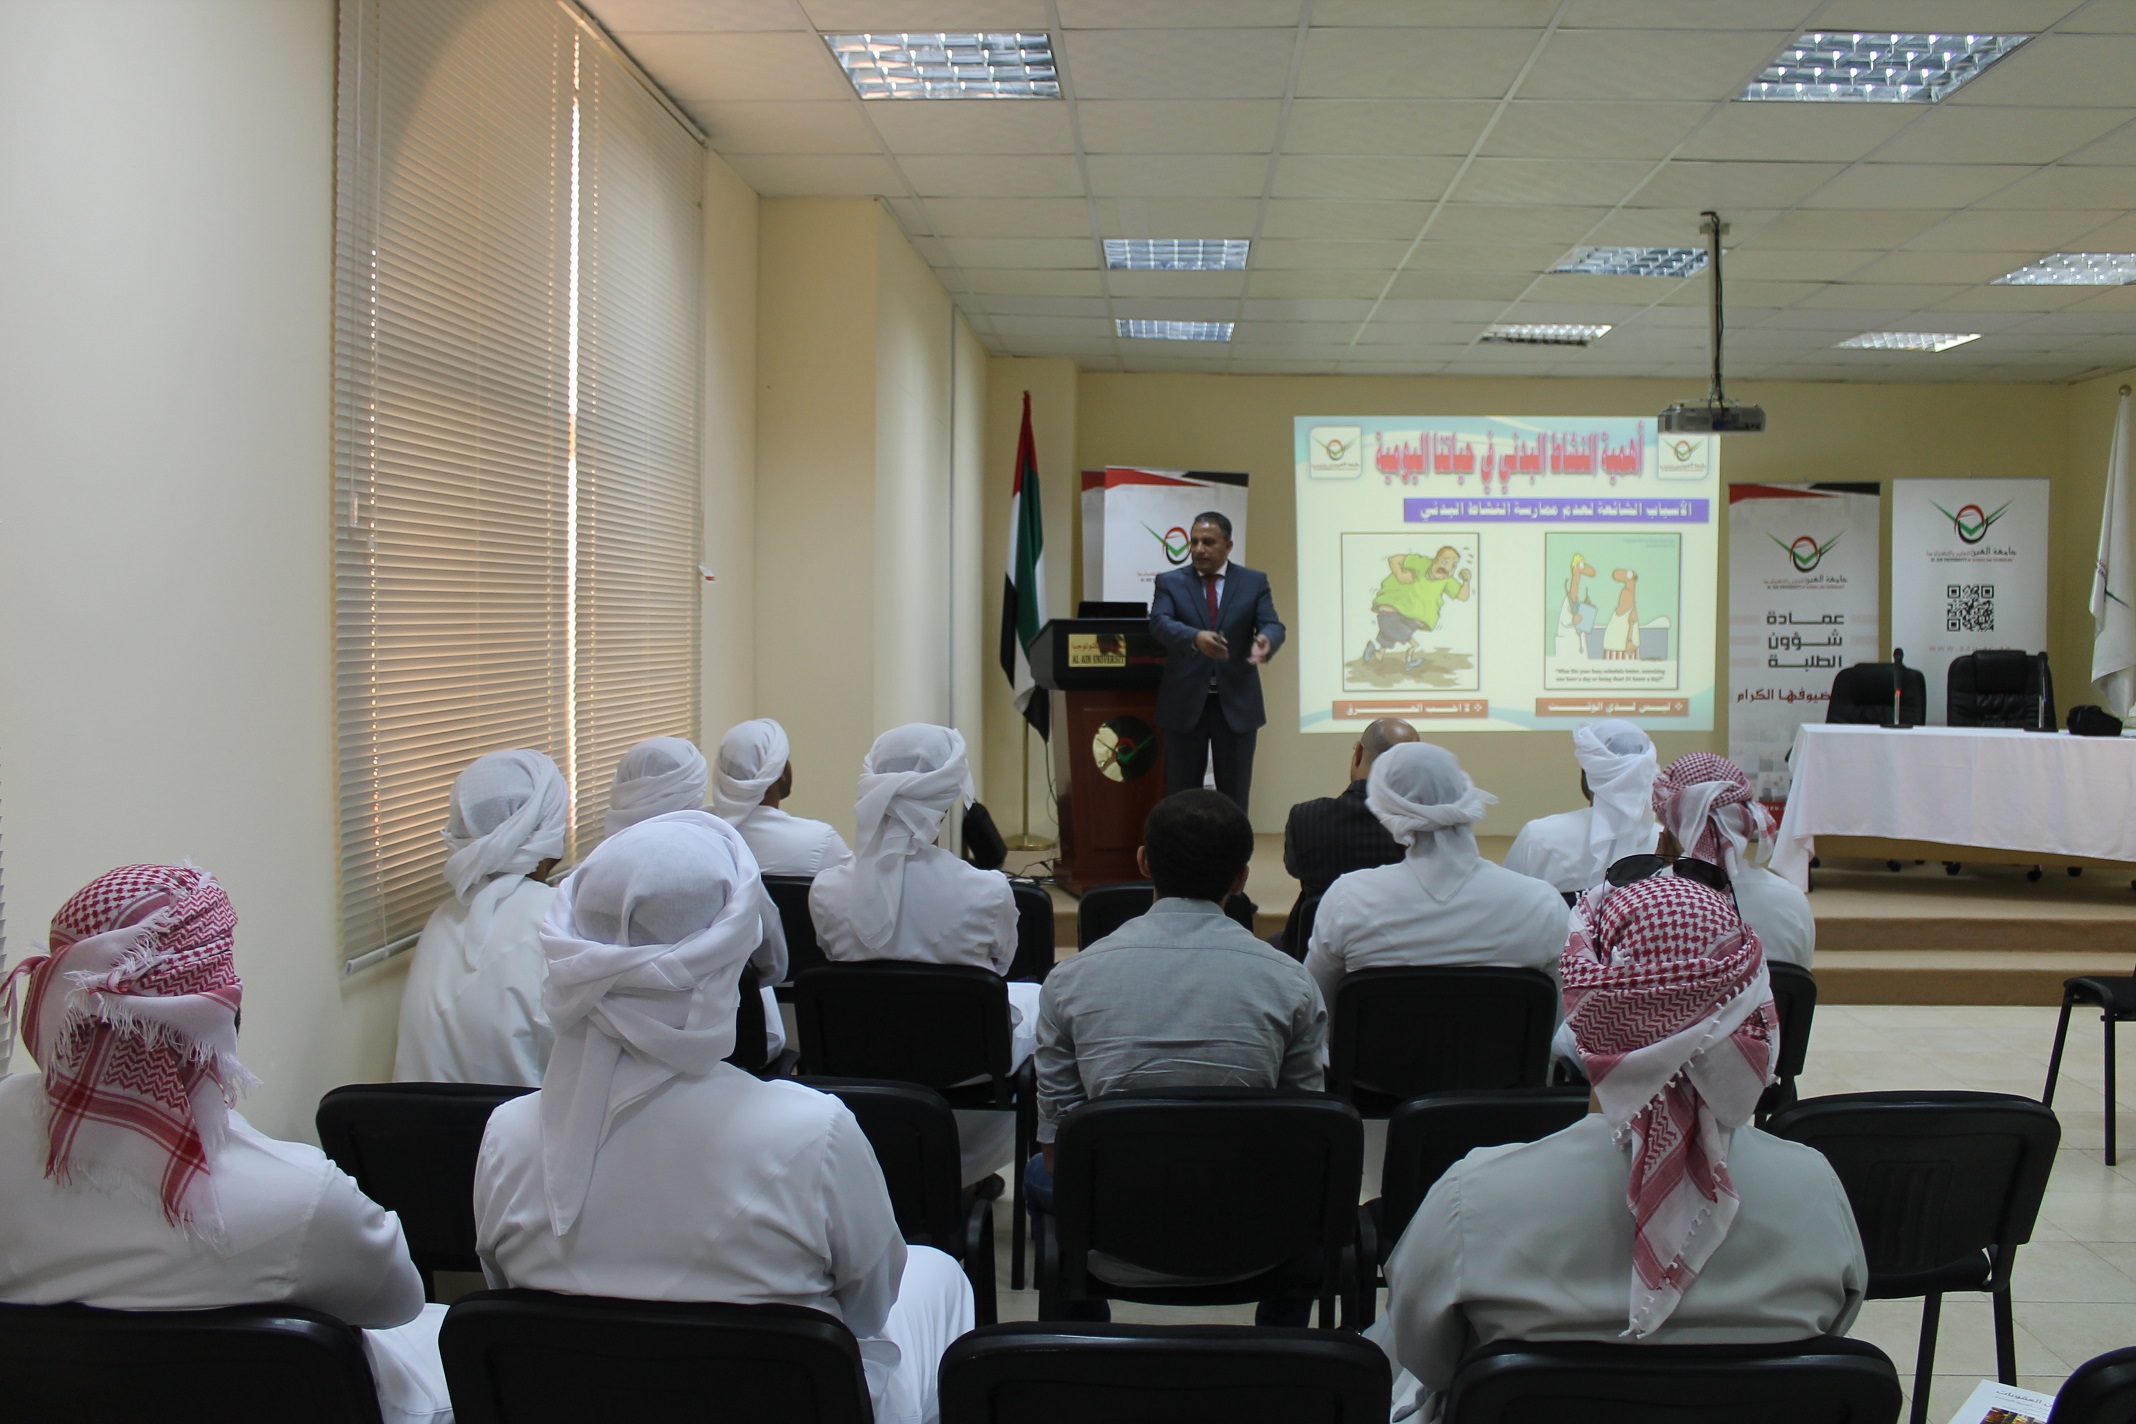 Mathematical Seminar Entitled "Sports Lifestyle" in Al Ain University